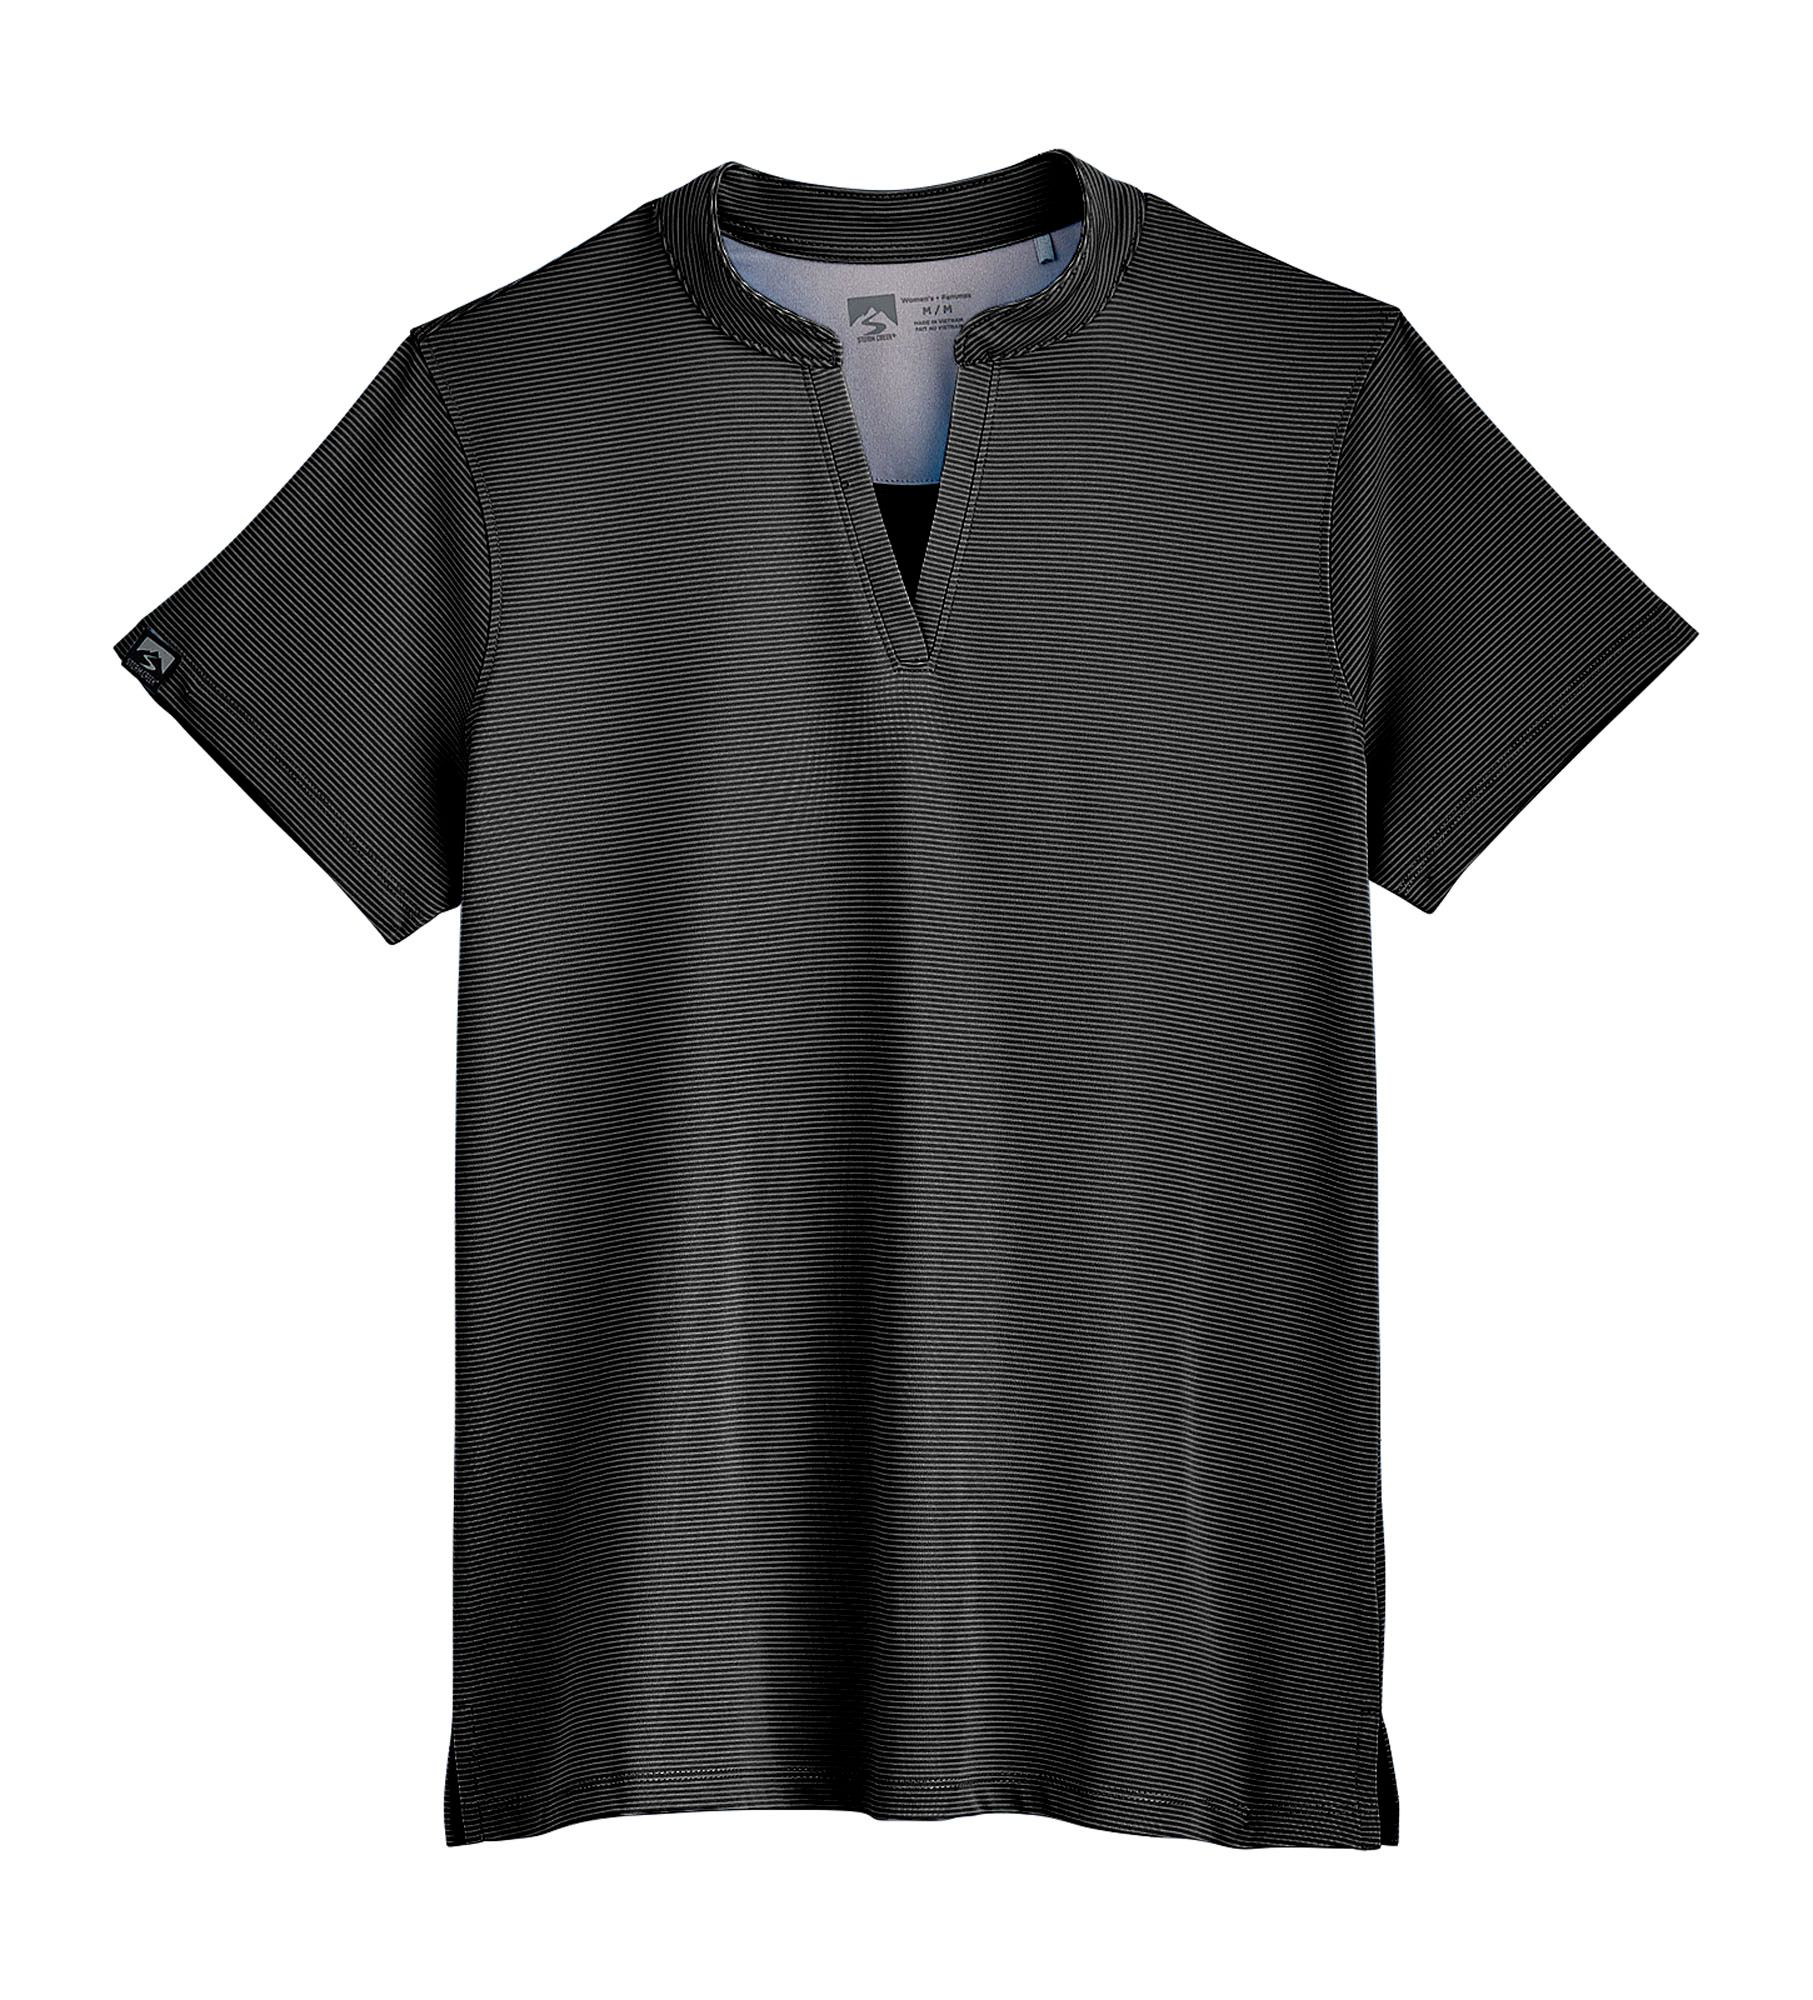 Storm Creek Optimist Short-Sleeve Polo Shirt for Ladies - Black - XL